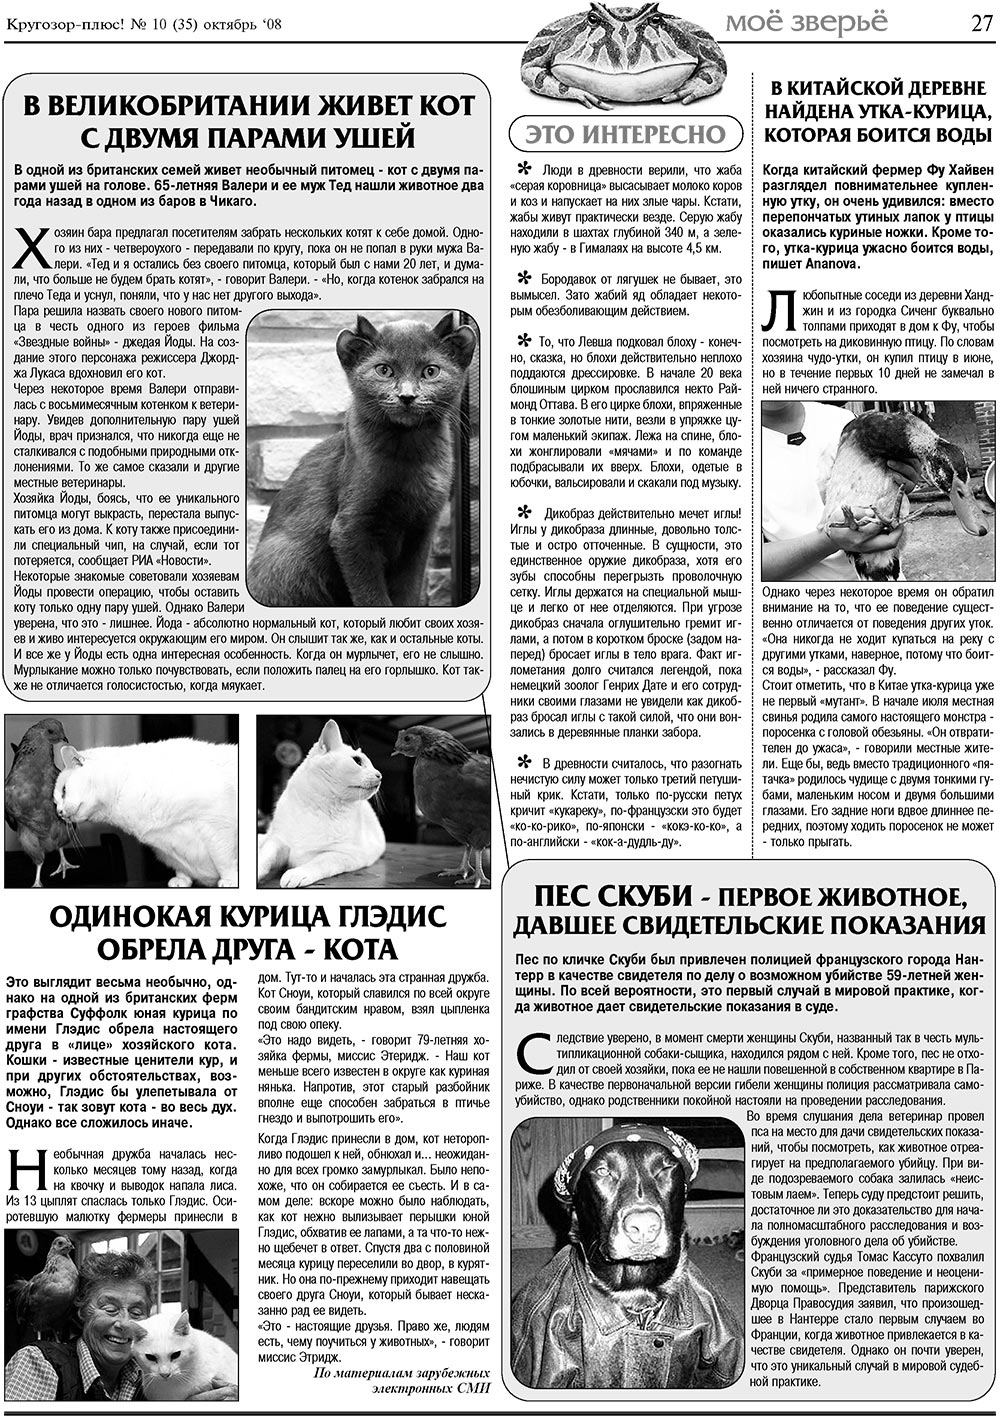 Кругозор плюс! (газета). 2008 год, номер 10, стр. 27